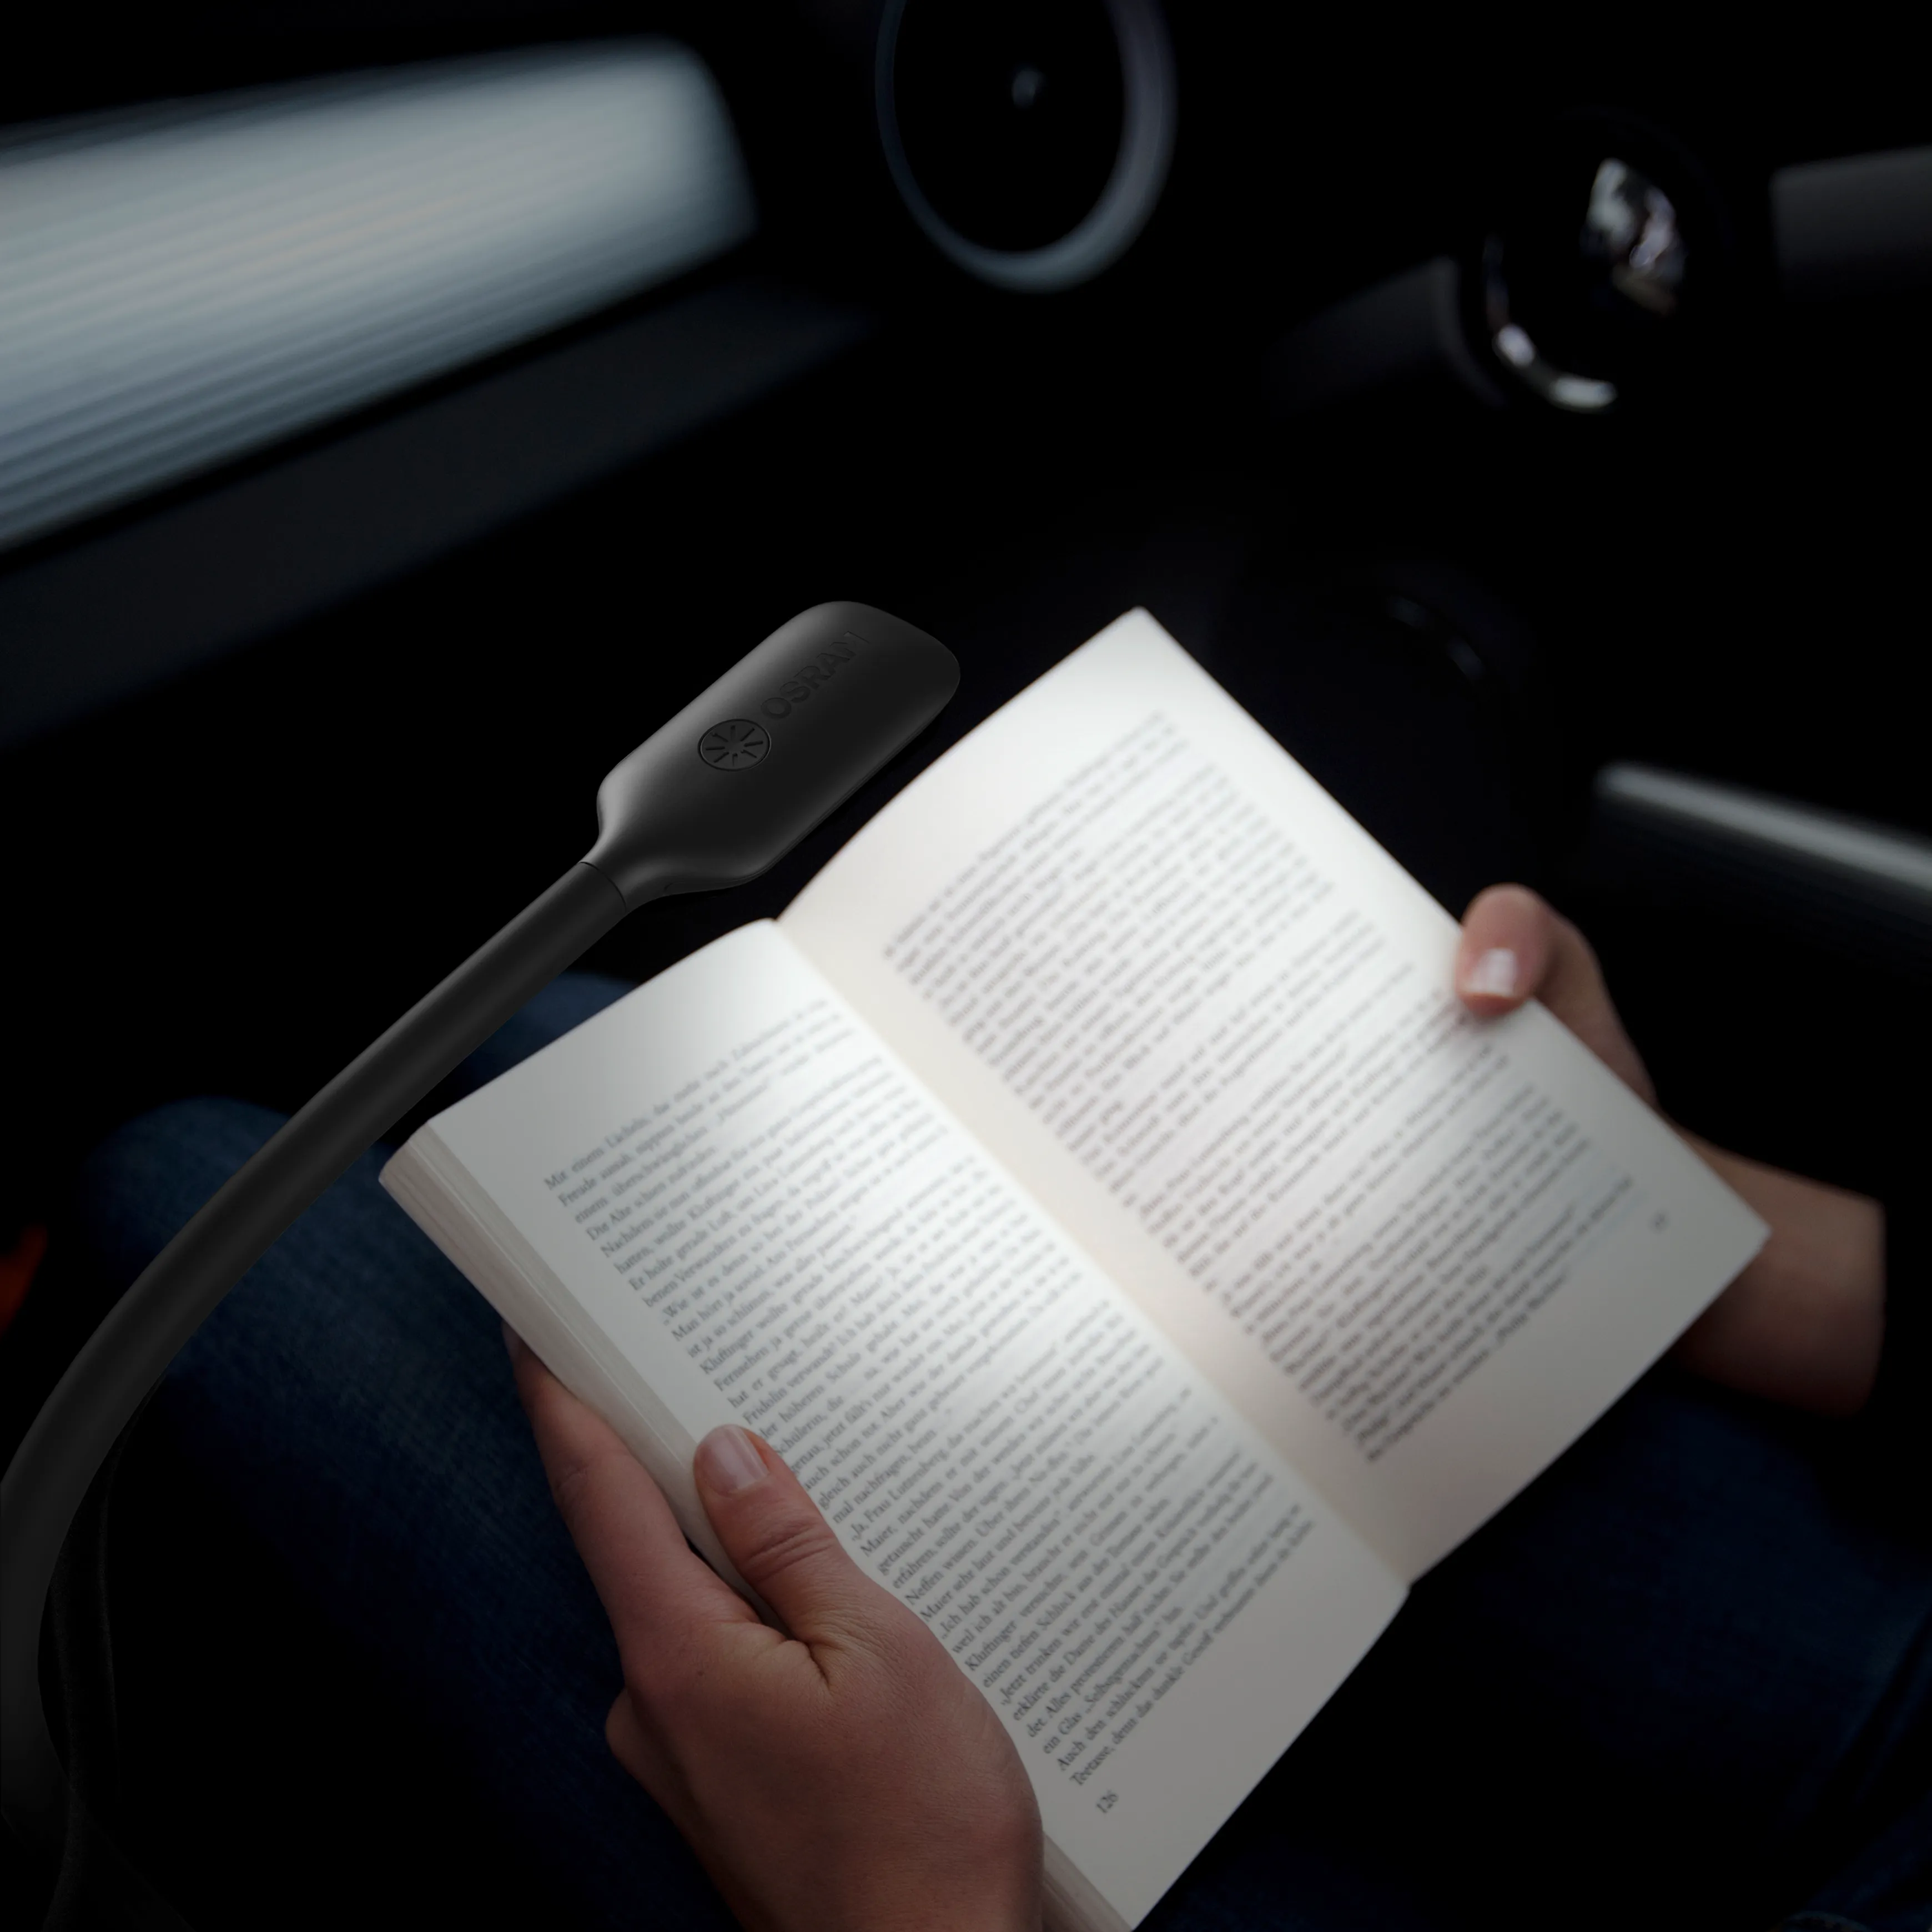 A osram passenger lamp in a car illuminating a book